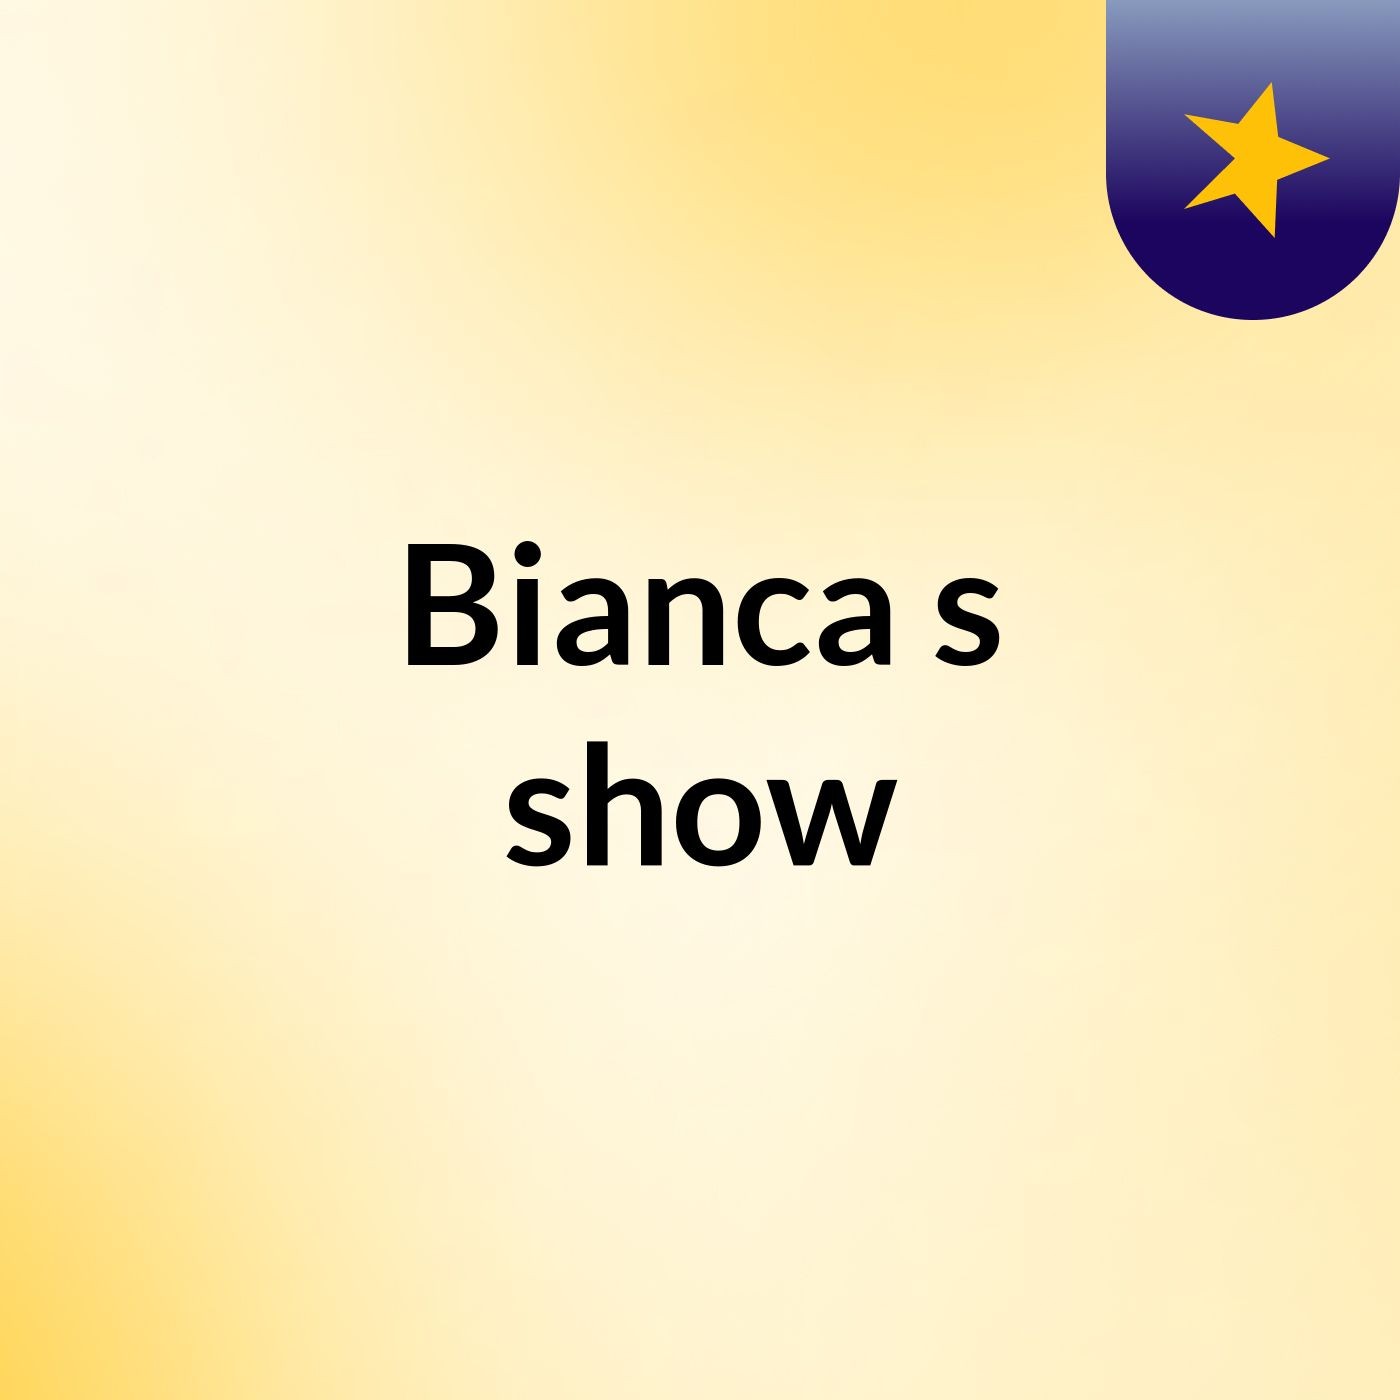 Bianca's show